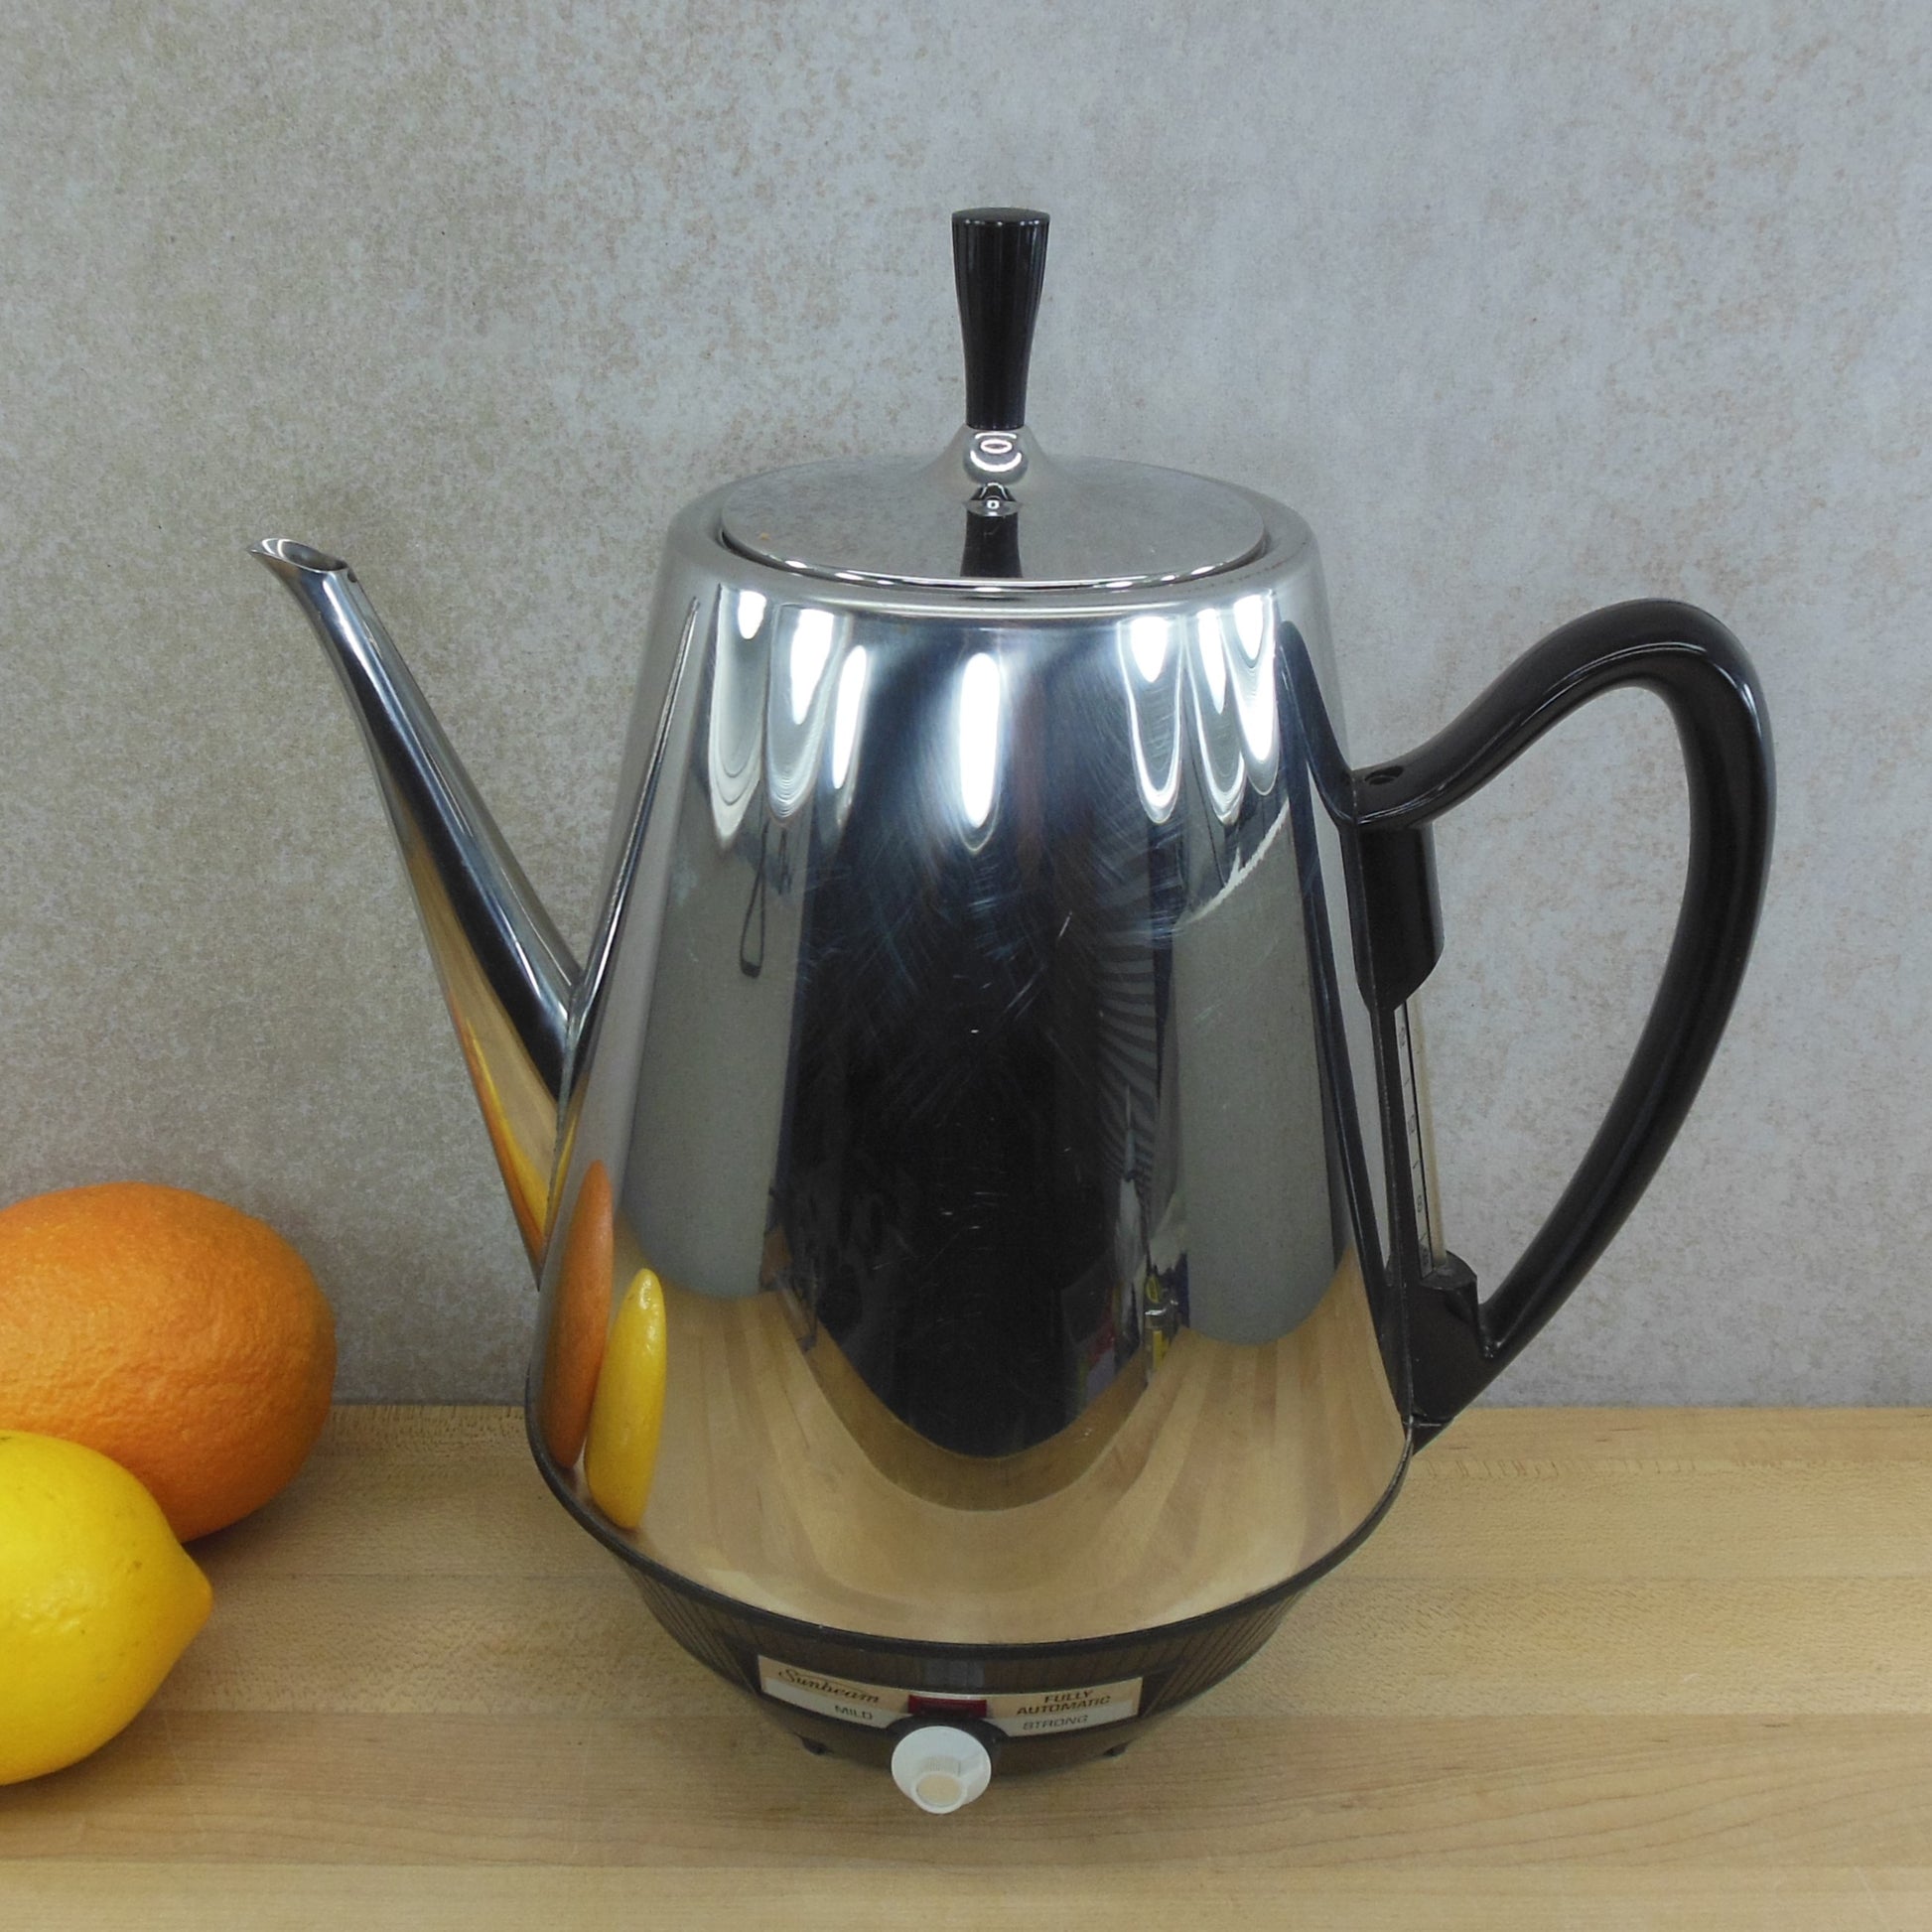 Farberware Superfast 8-cup Percolator Complete Set Electric Coffee